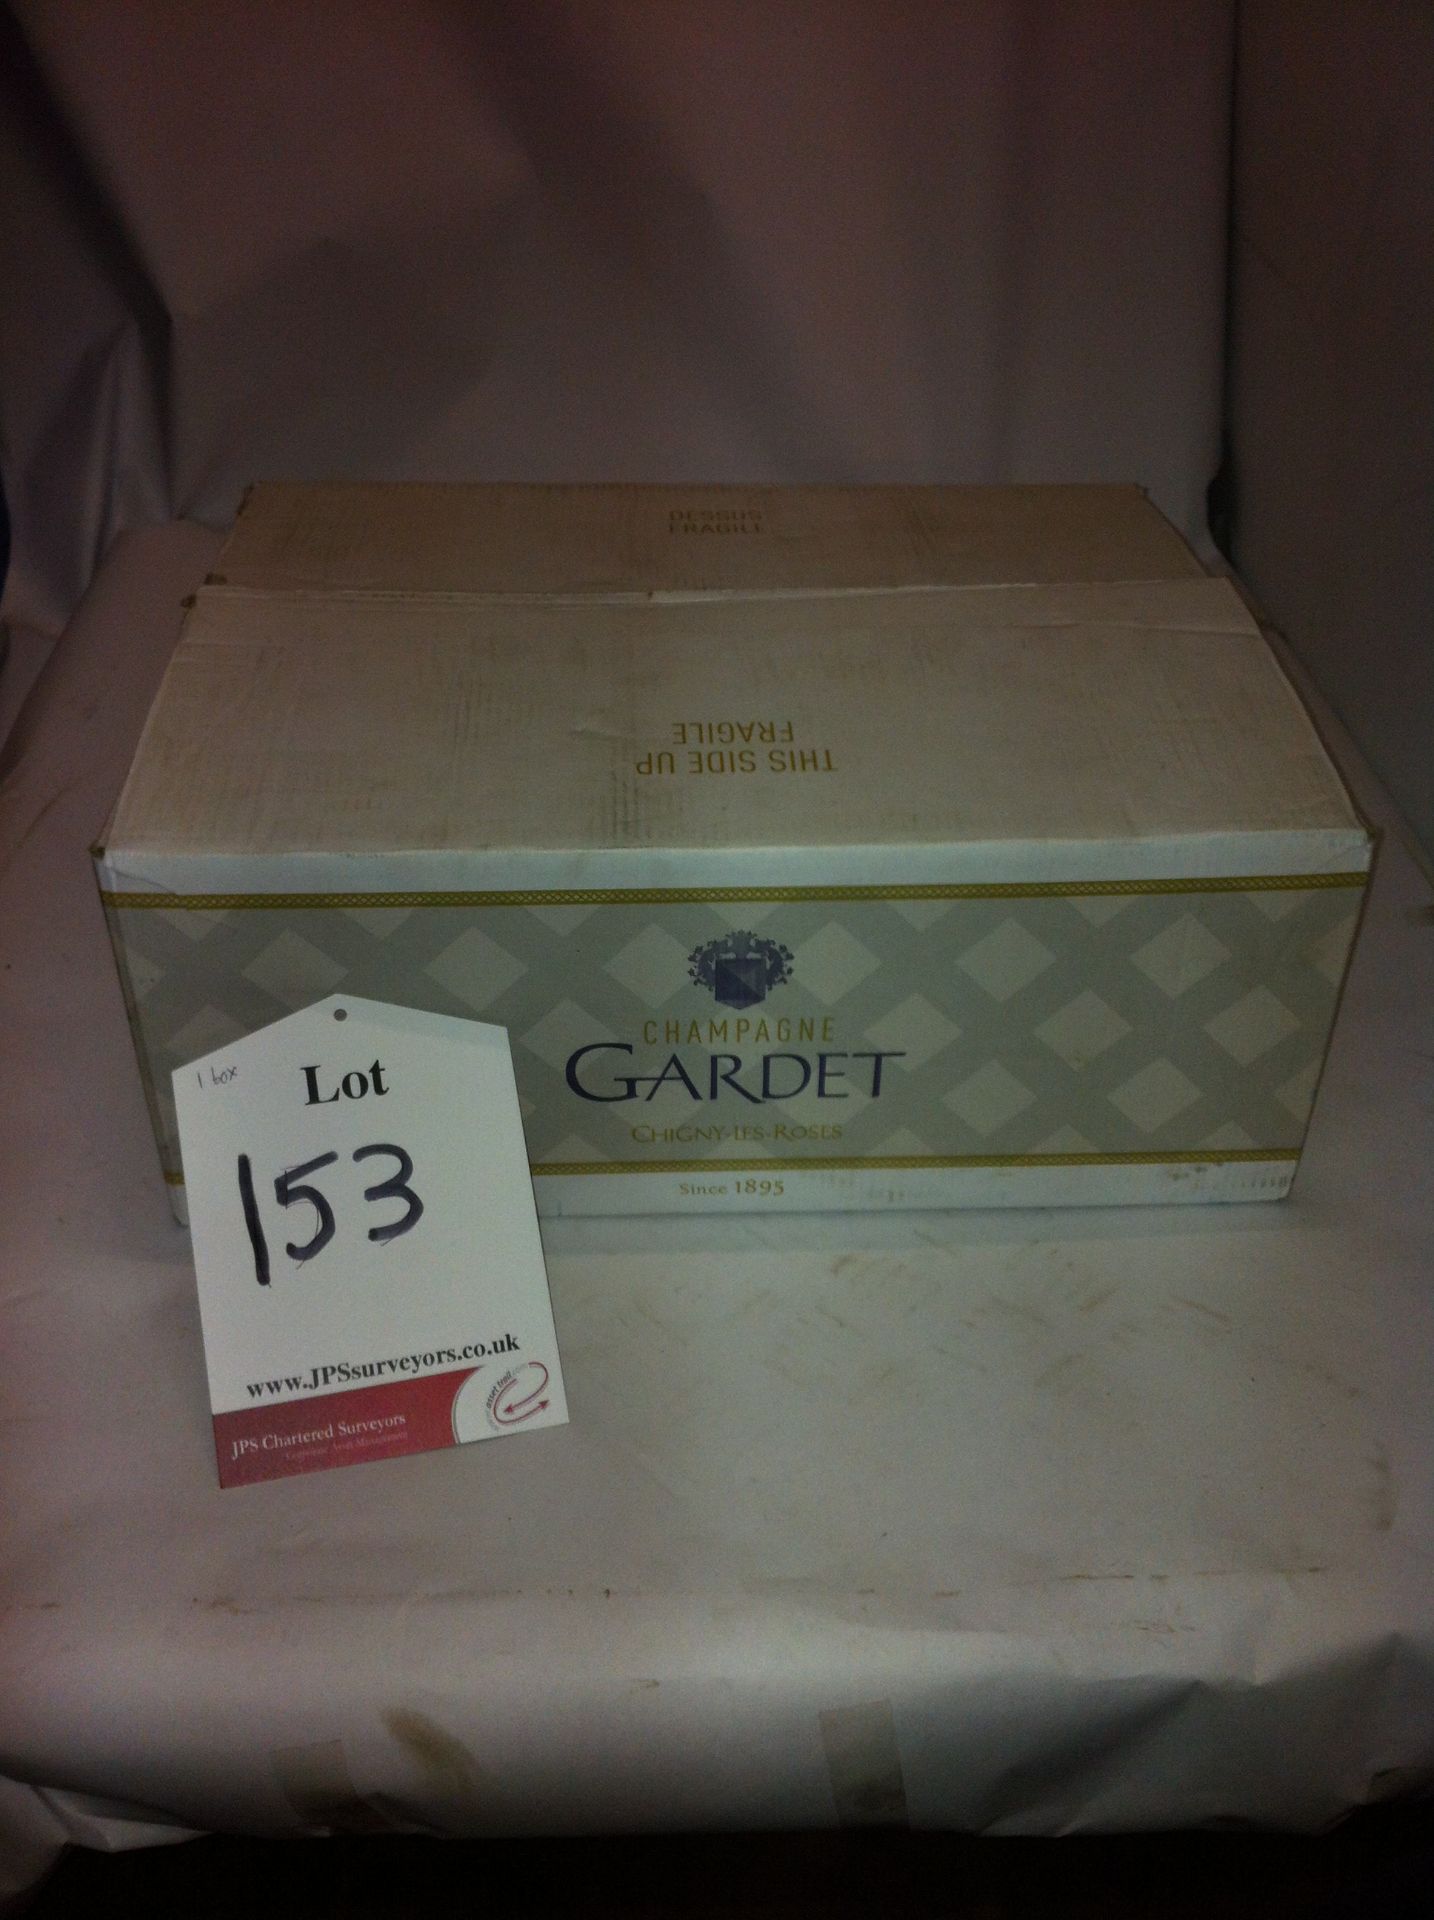 11 x Bottles of Gardet tradition champagne Brut ha - Image 2 of 2